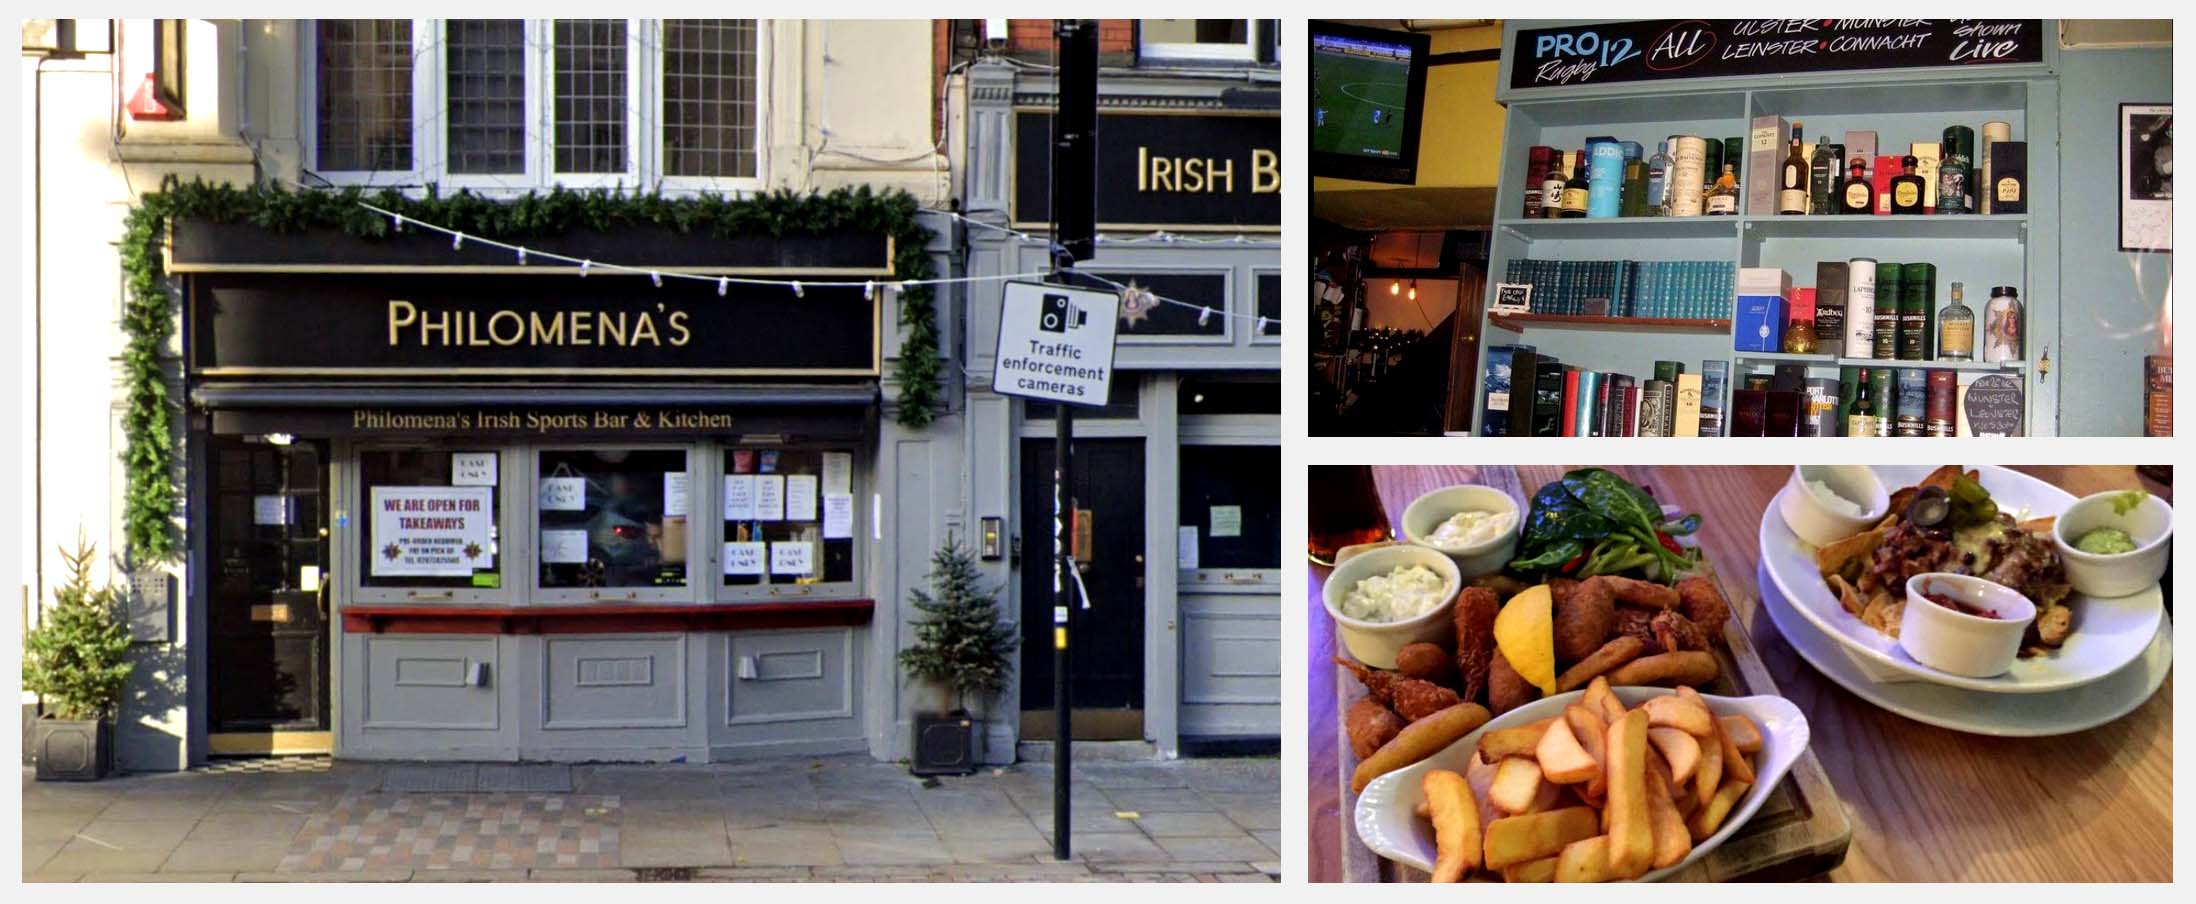 philomena's irish sports bar and kitchen